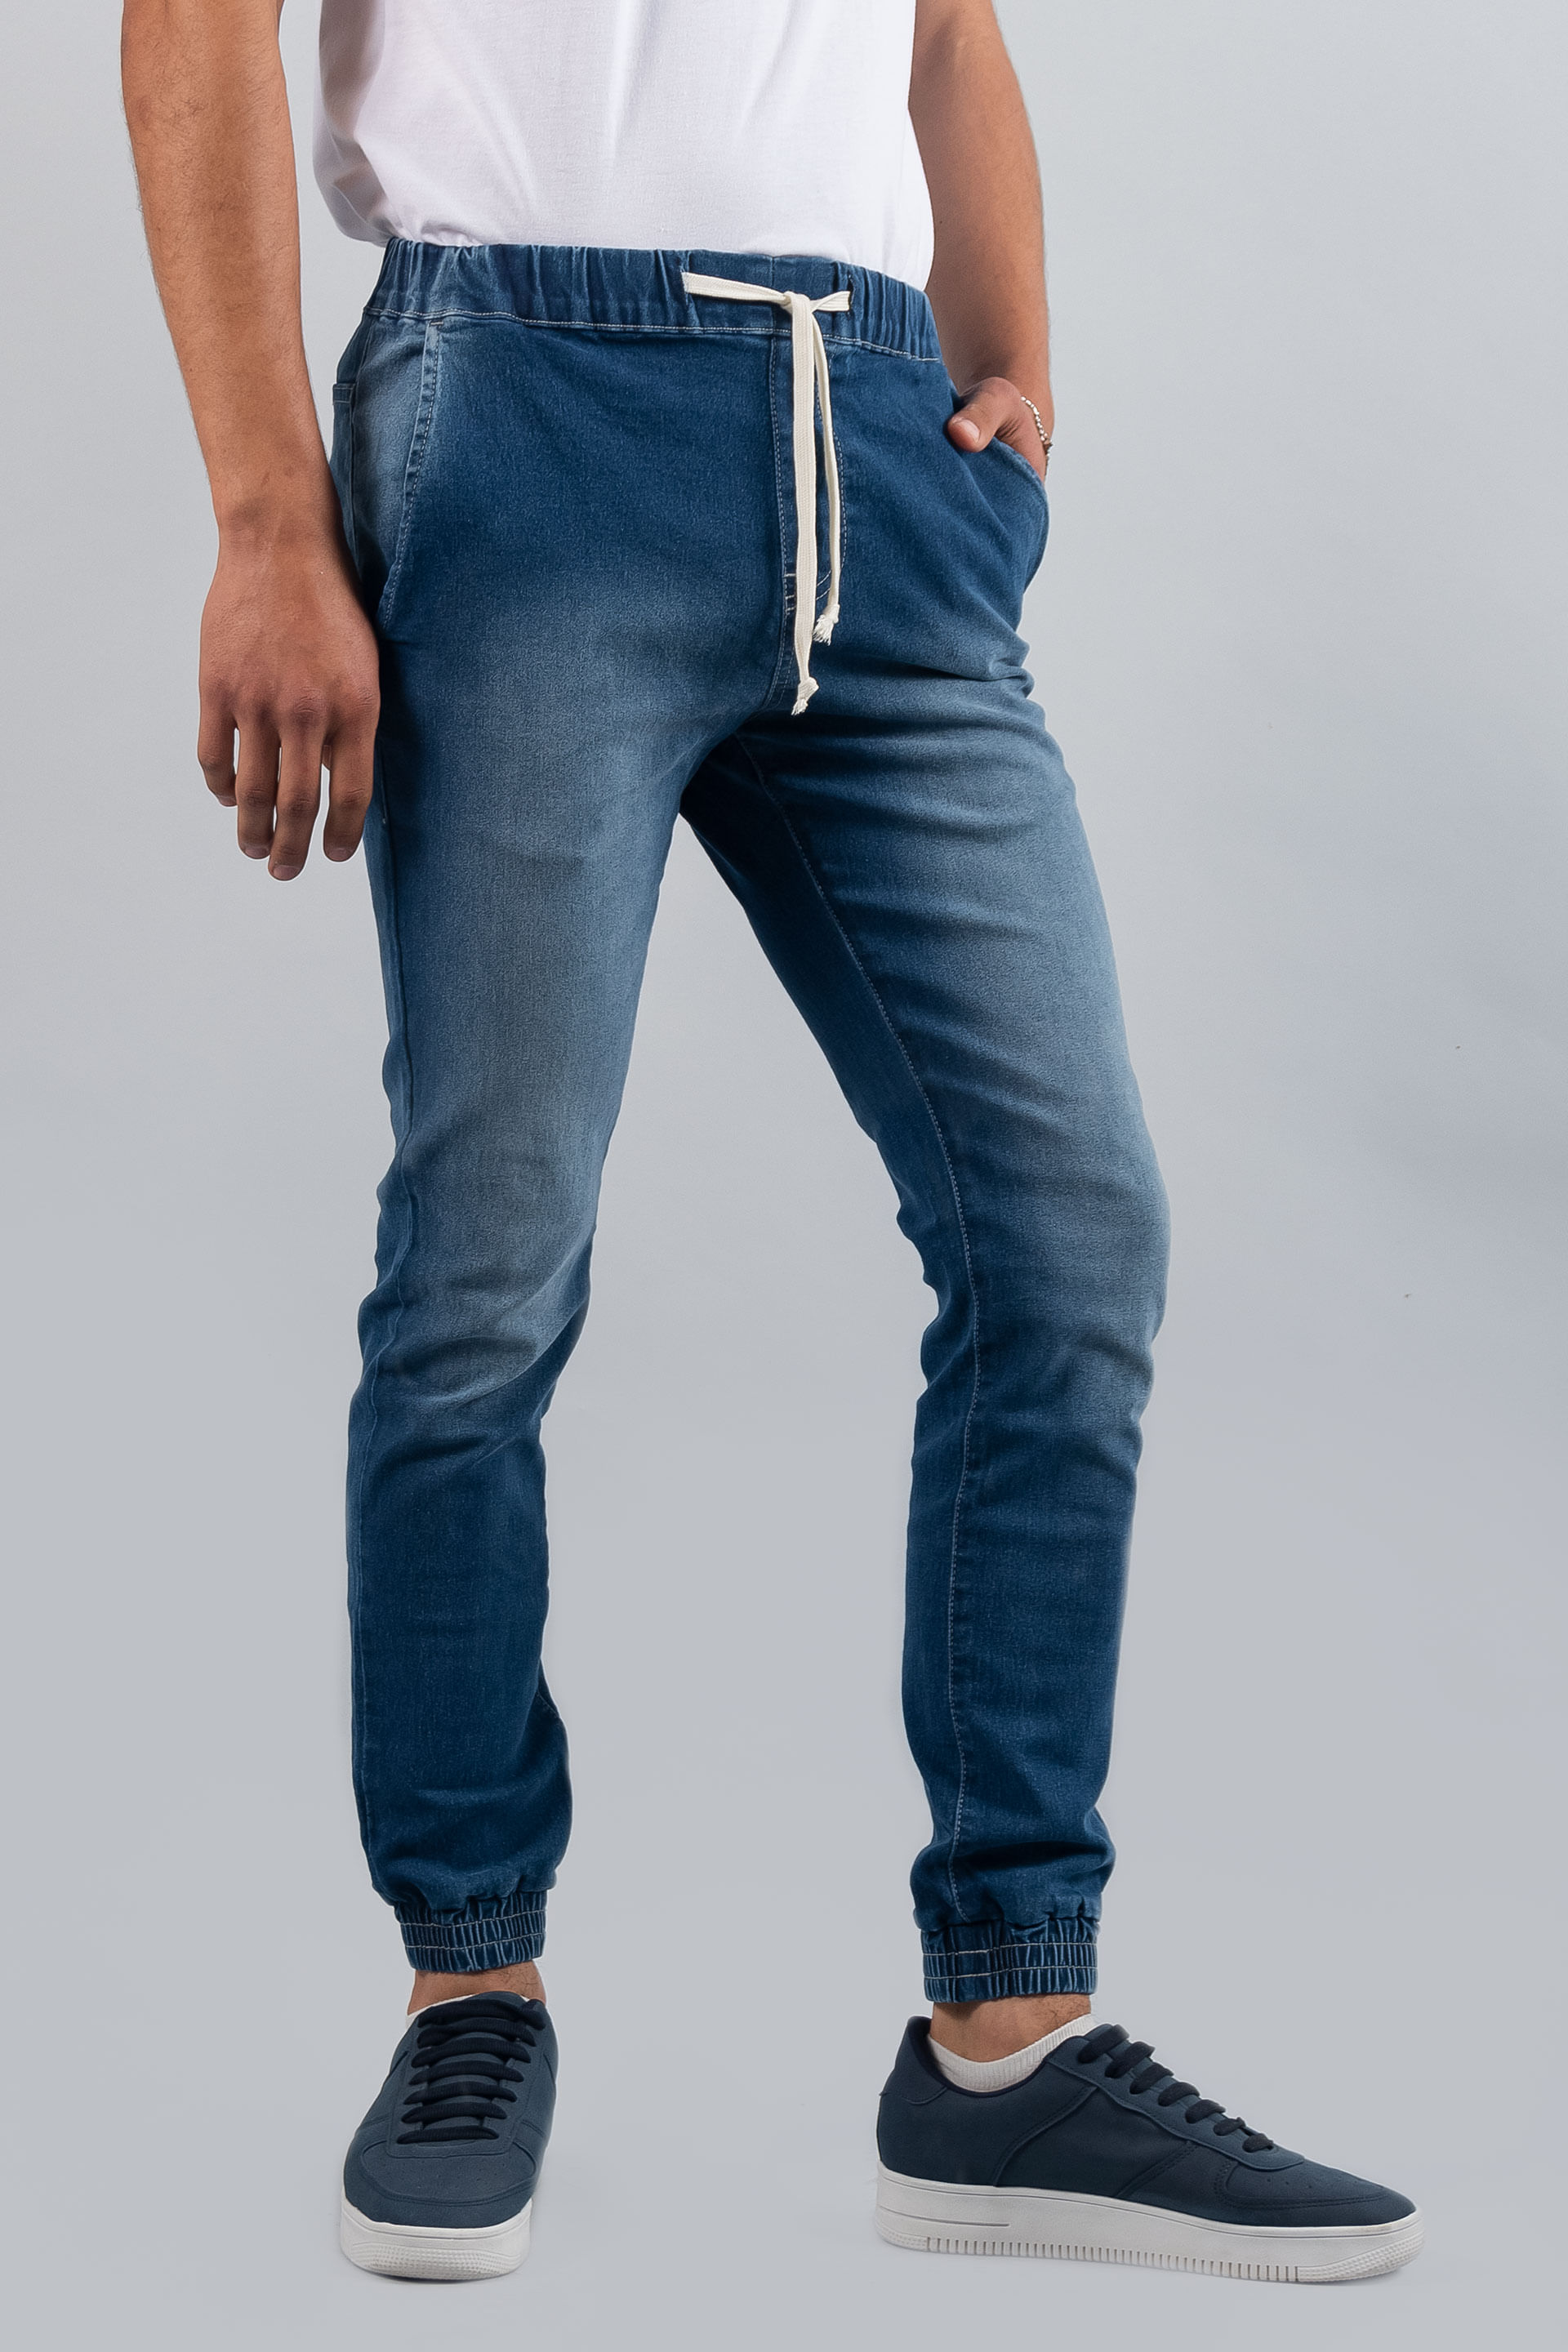 Joggers Skinny Oggi - Moda para Hombre Mezclilla Azul Oscuro 85565